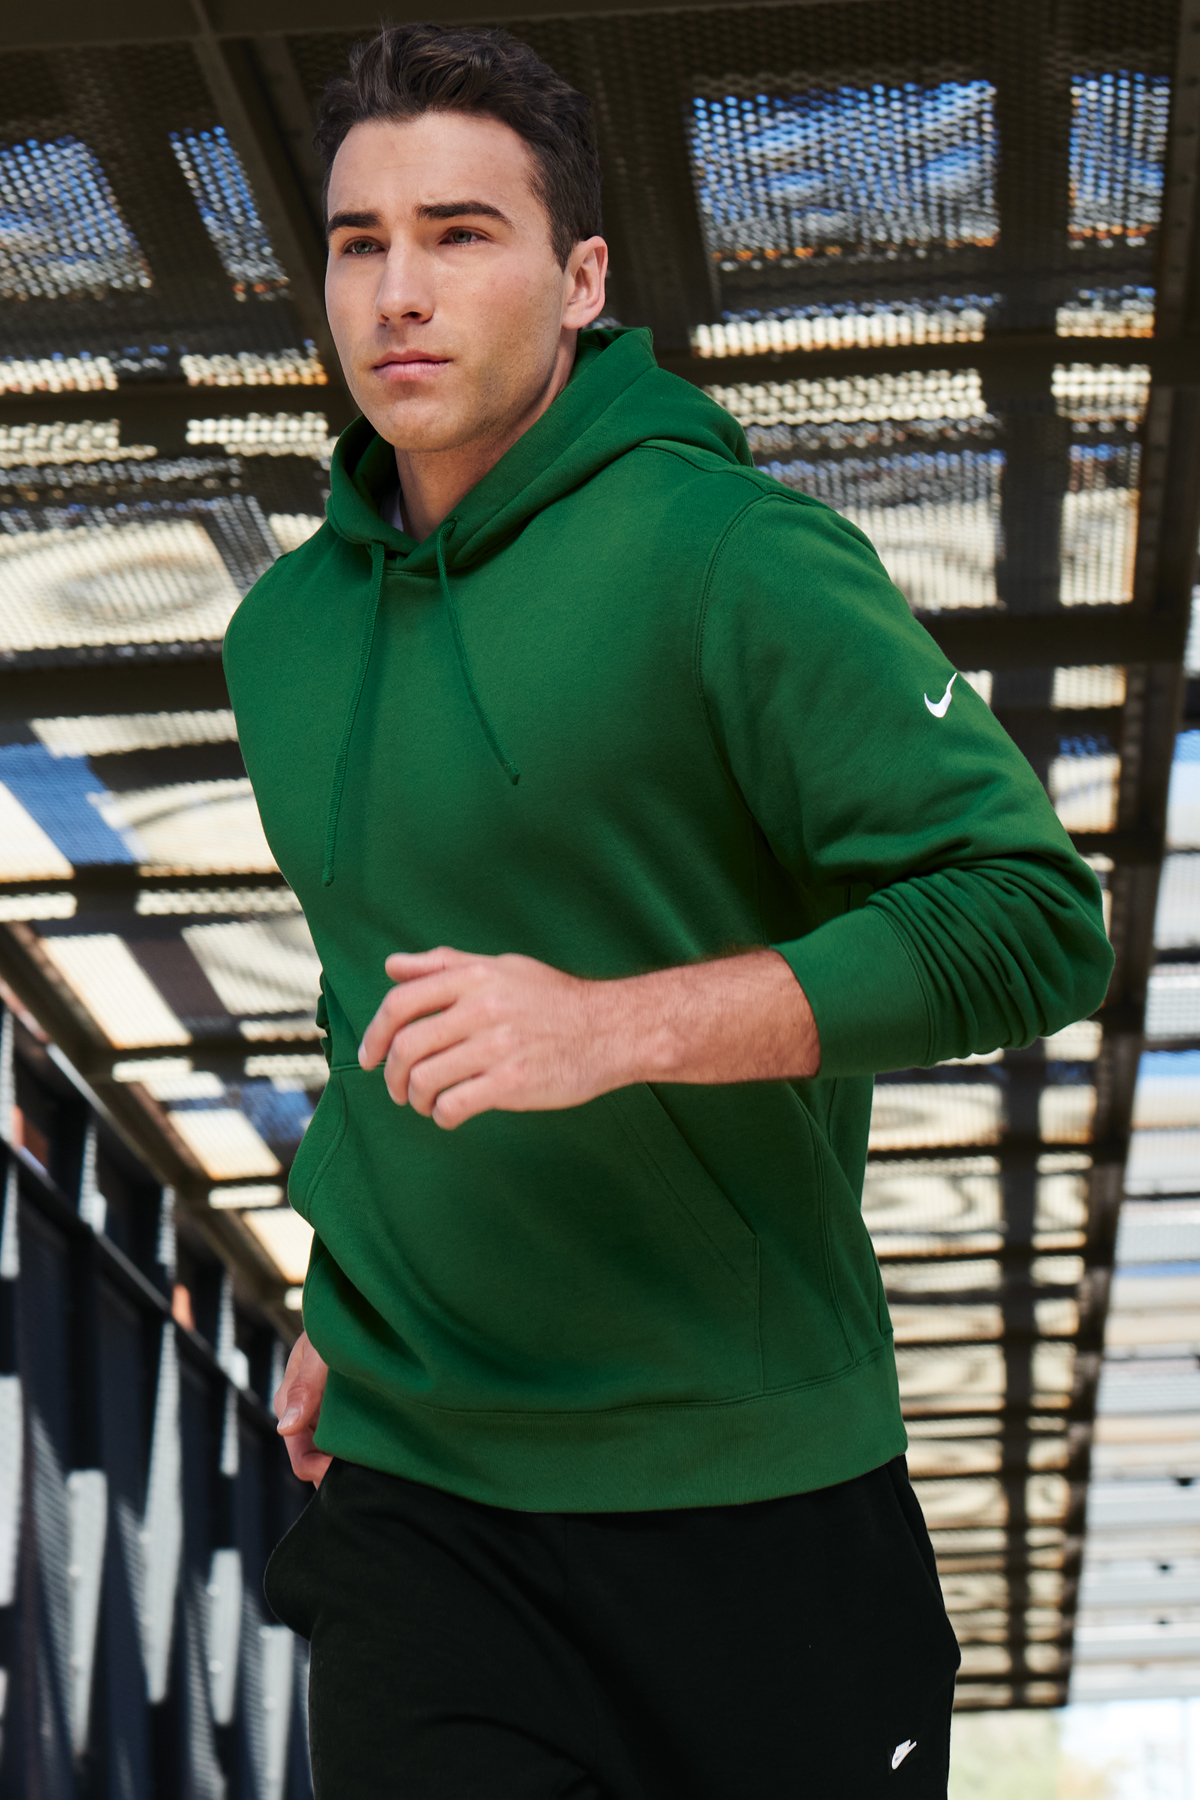 Nike Club Fleece Pullover Hoodie, Product